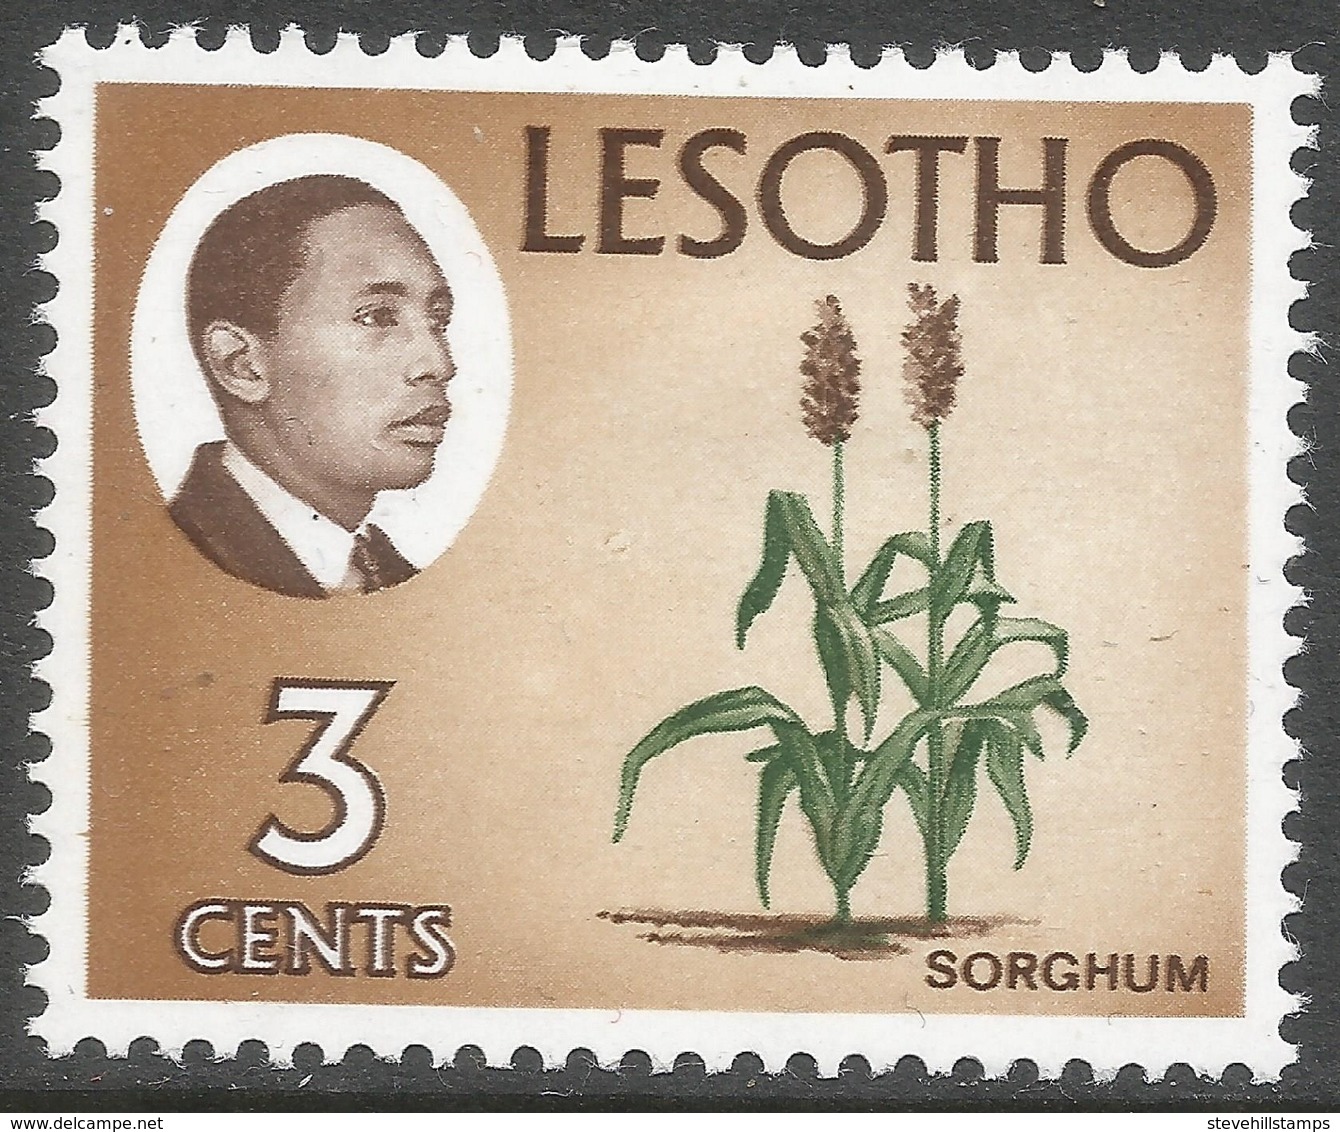 Lesotho. 1967 Definitives. 3c MH. SG 151 - Lesotho (1966-...)